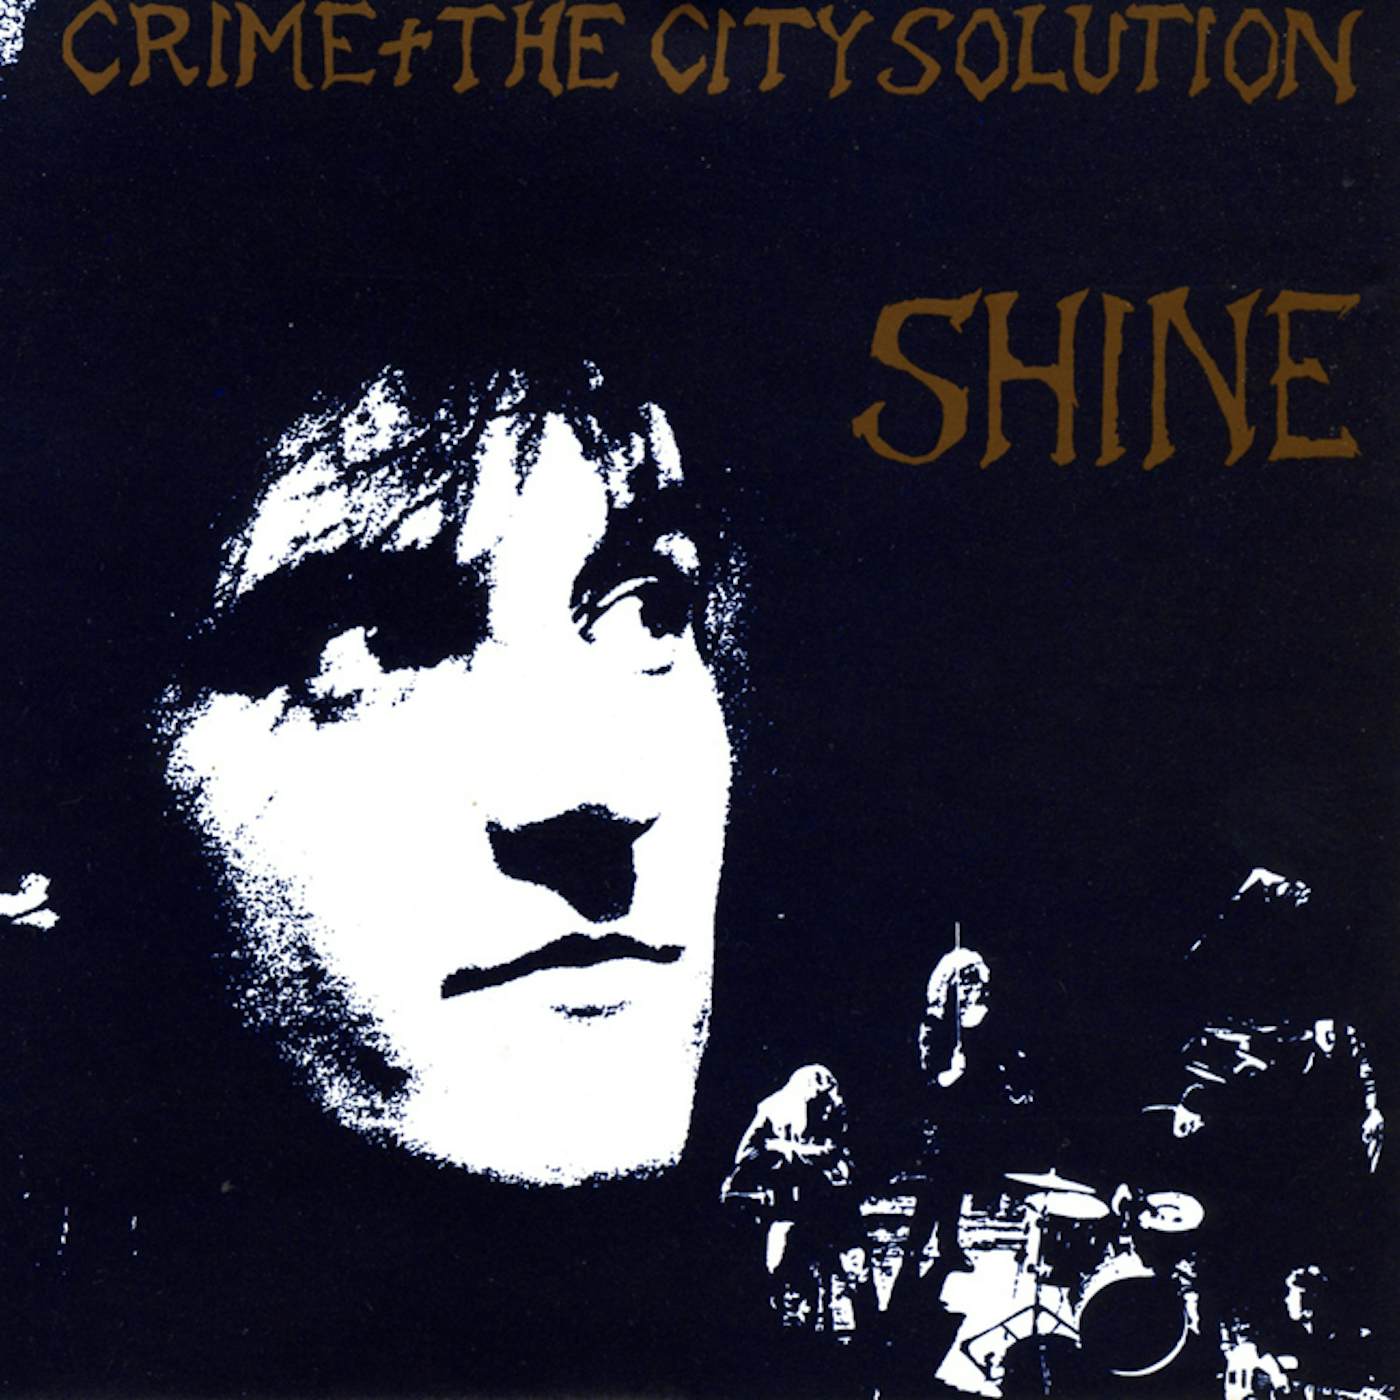 Crime & the City Solution Shine CD